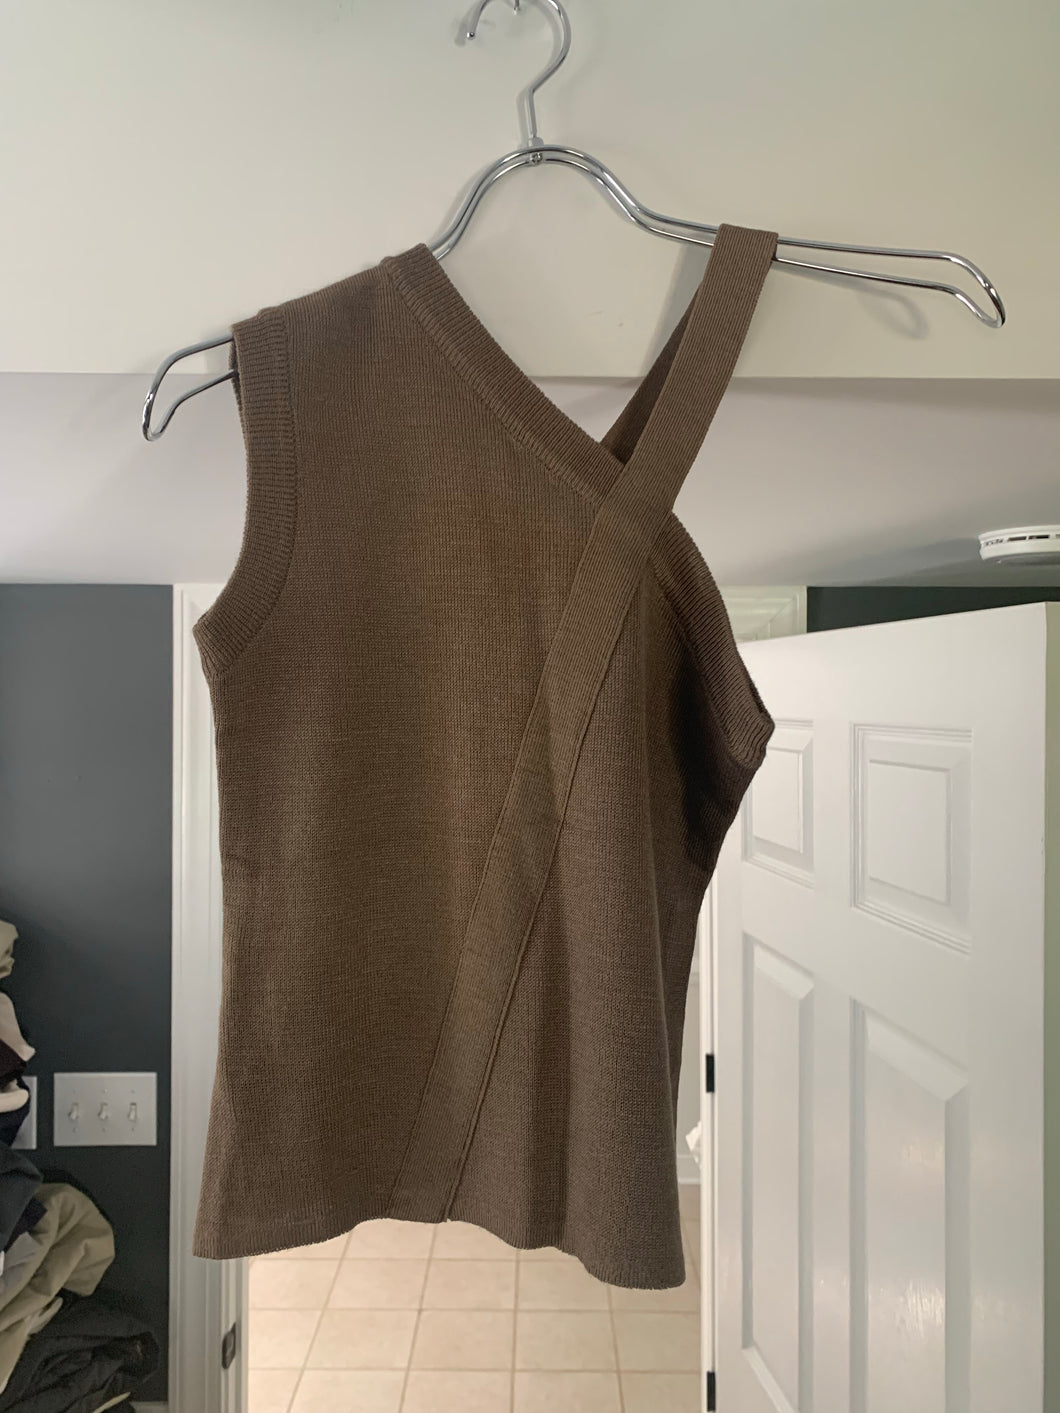 1990s Joe Casely Hayford Asymmetrical Knitted Vest - Size S